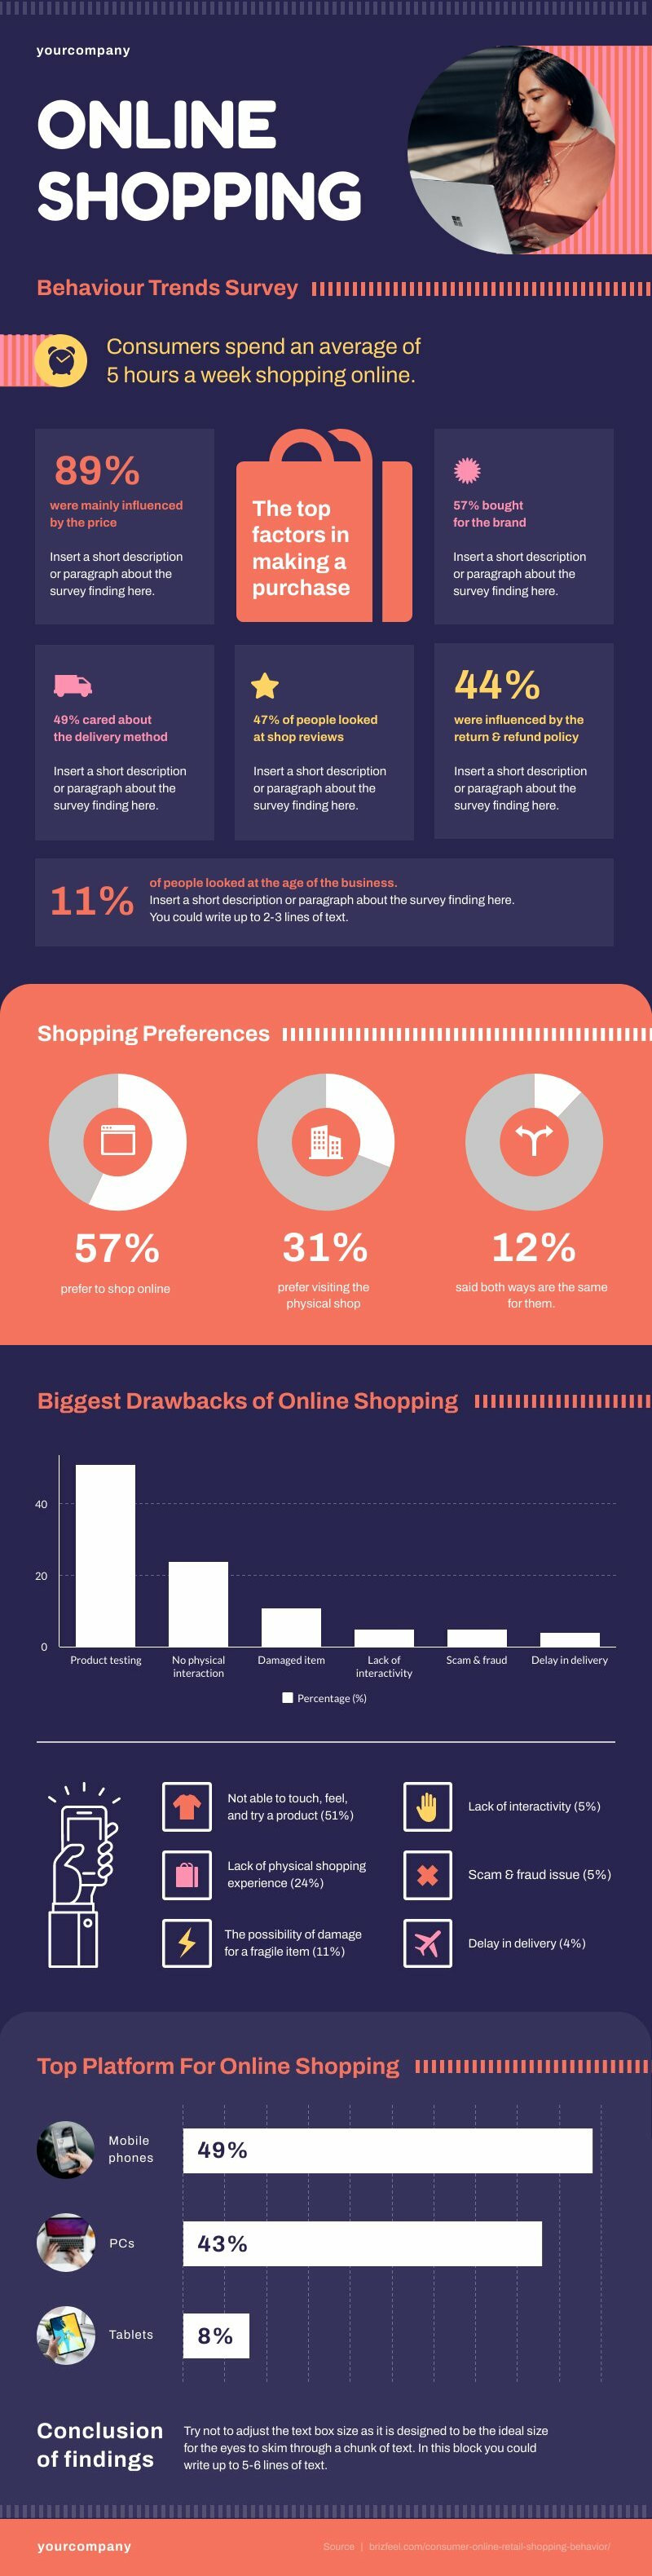 Online Shopping Survey